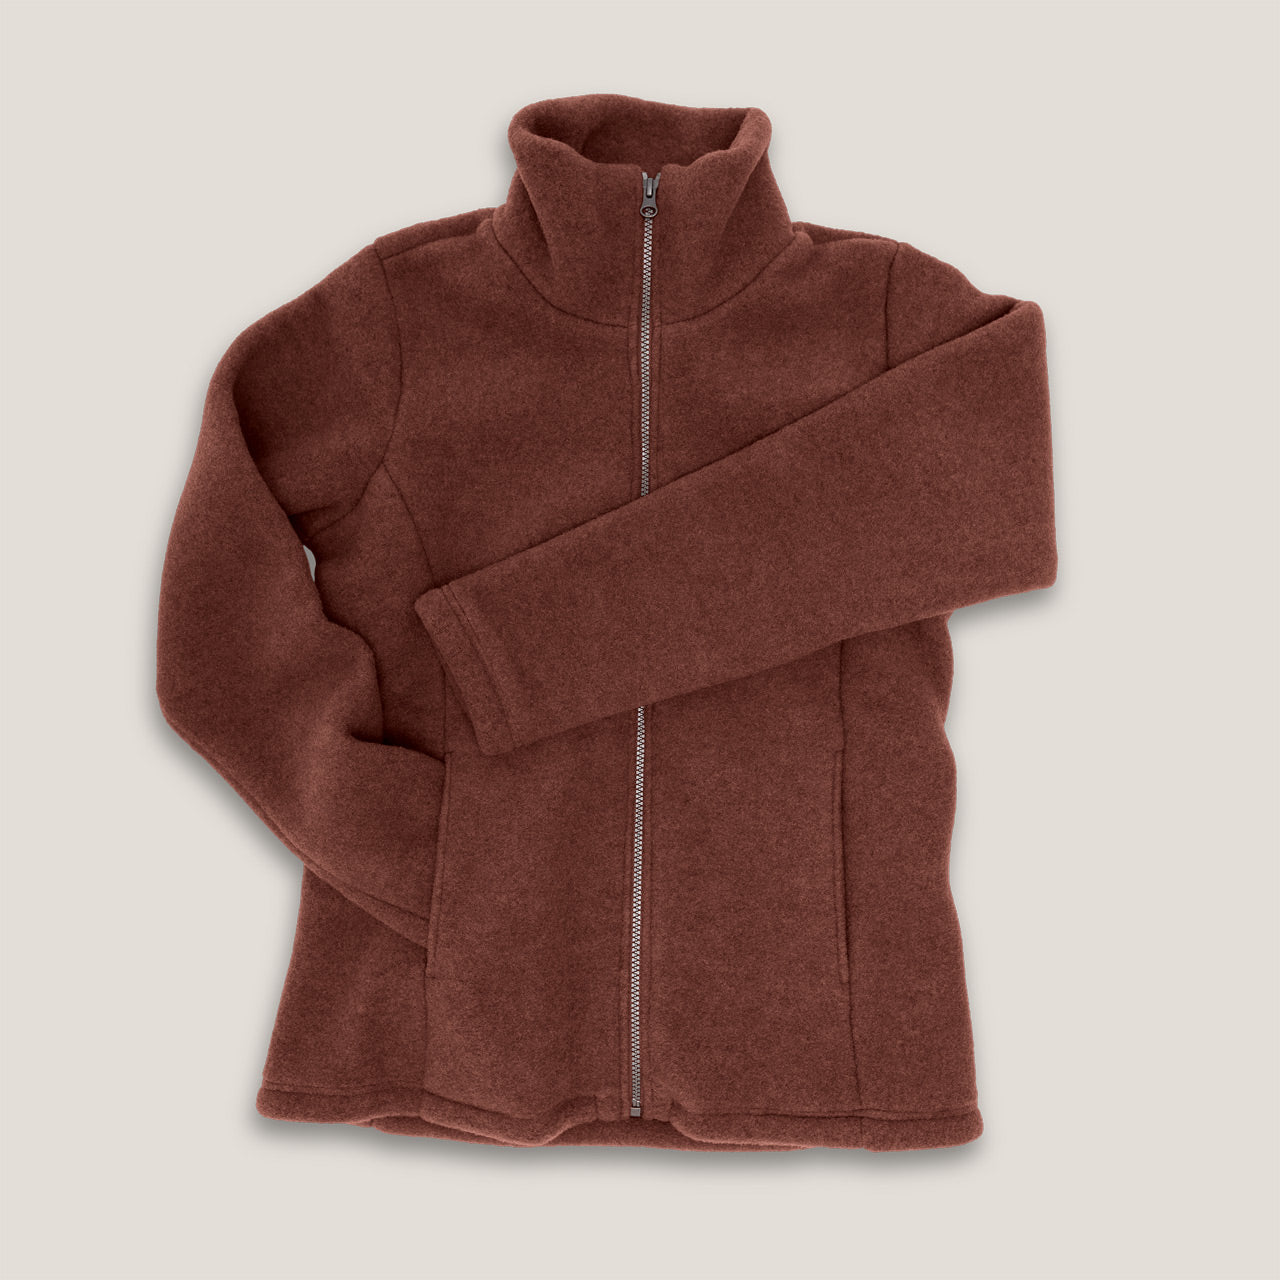 Women's Zip Jacket - 100% Organic Wool Fleece - Cinnamon (XS-L) *Pre-order